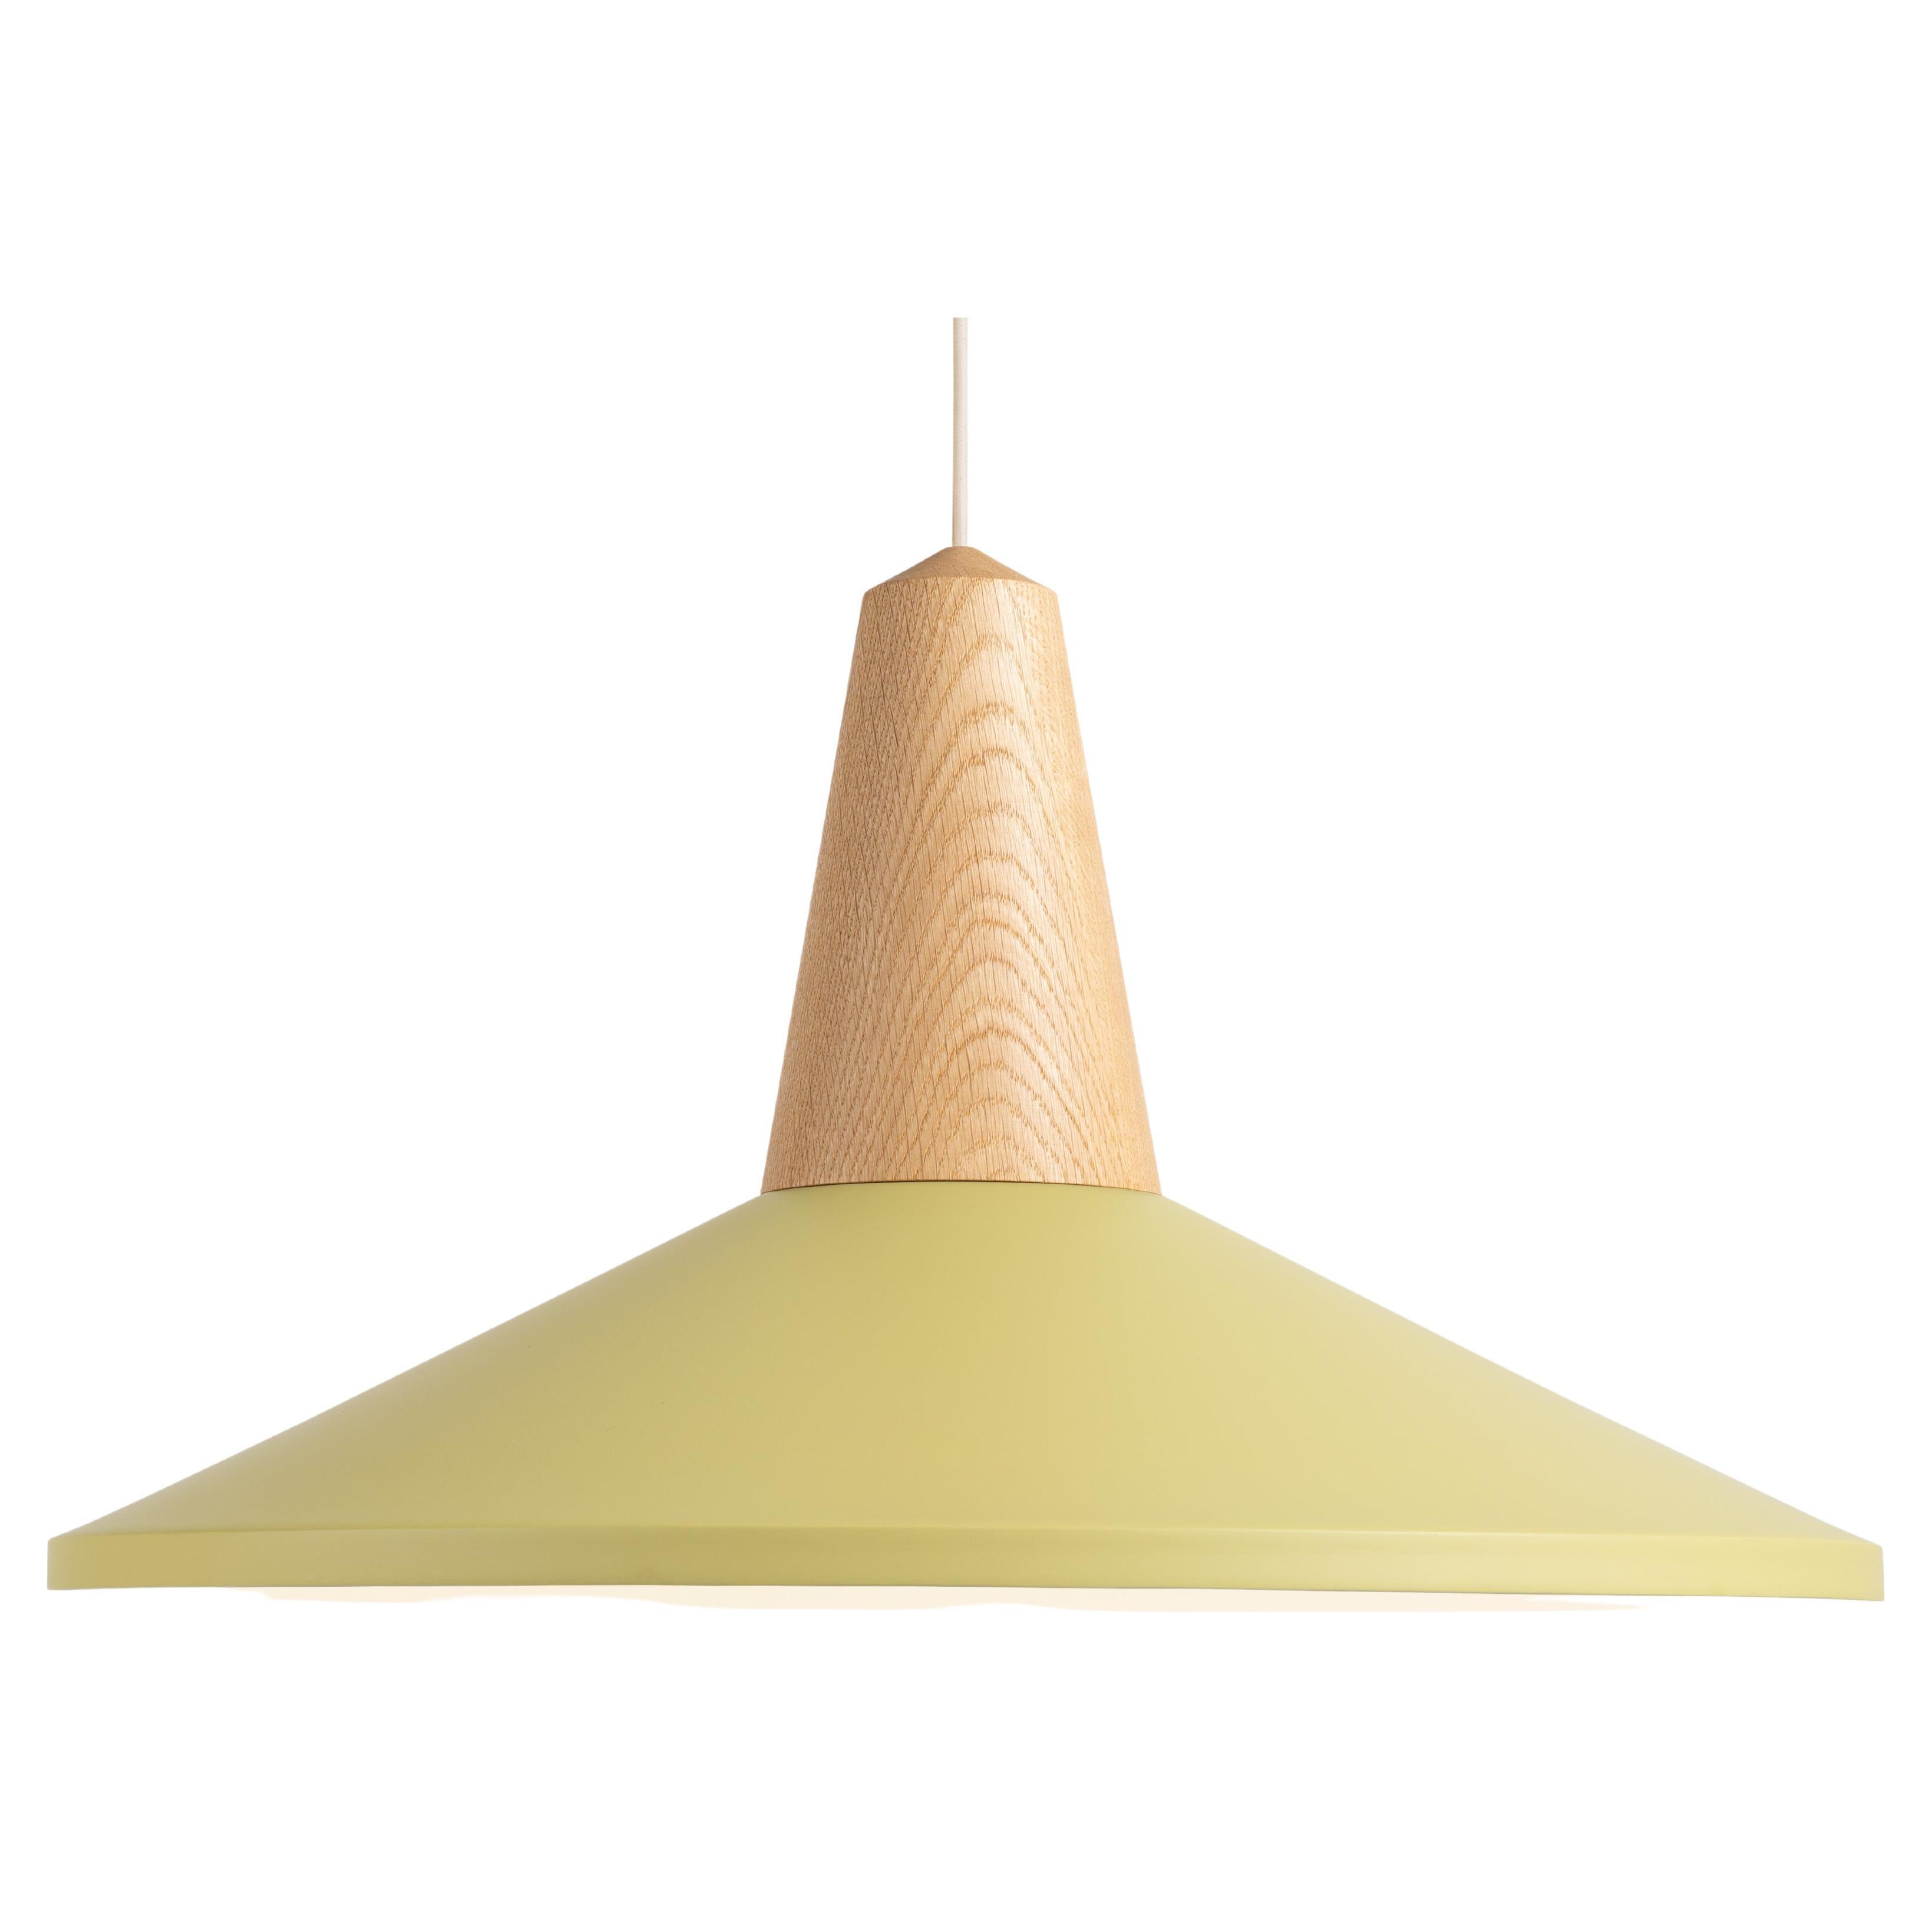 Schneid Studio Eikon Shell Olive, Oak, Pendant Lamp For Sale